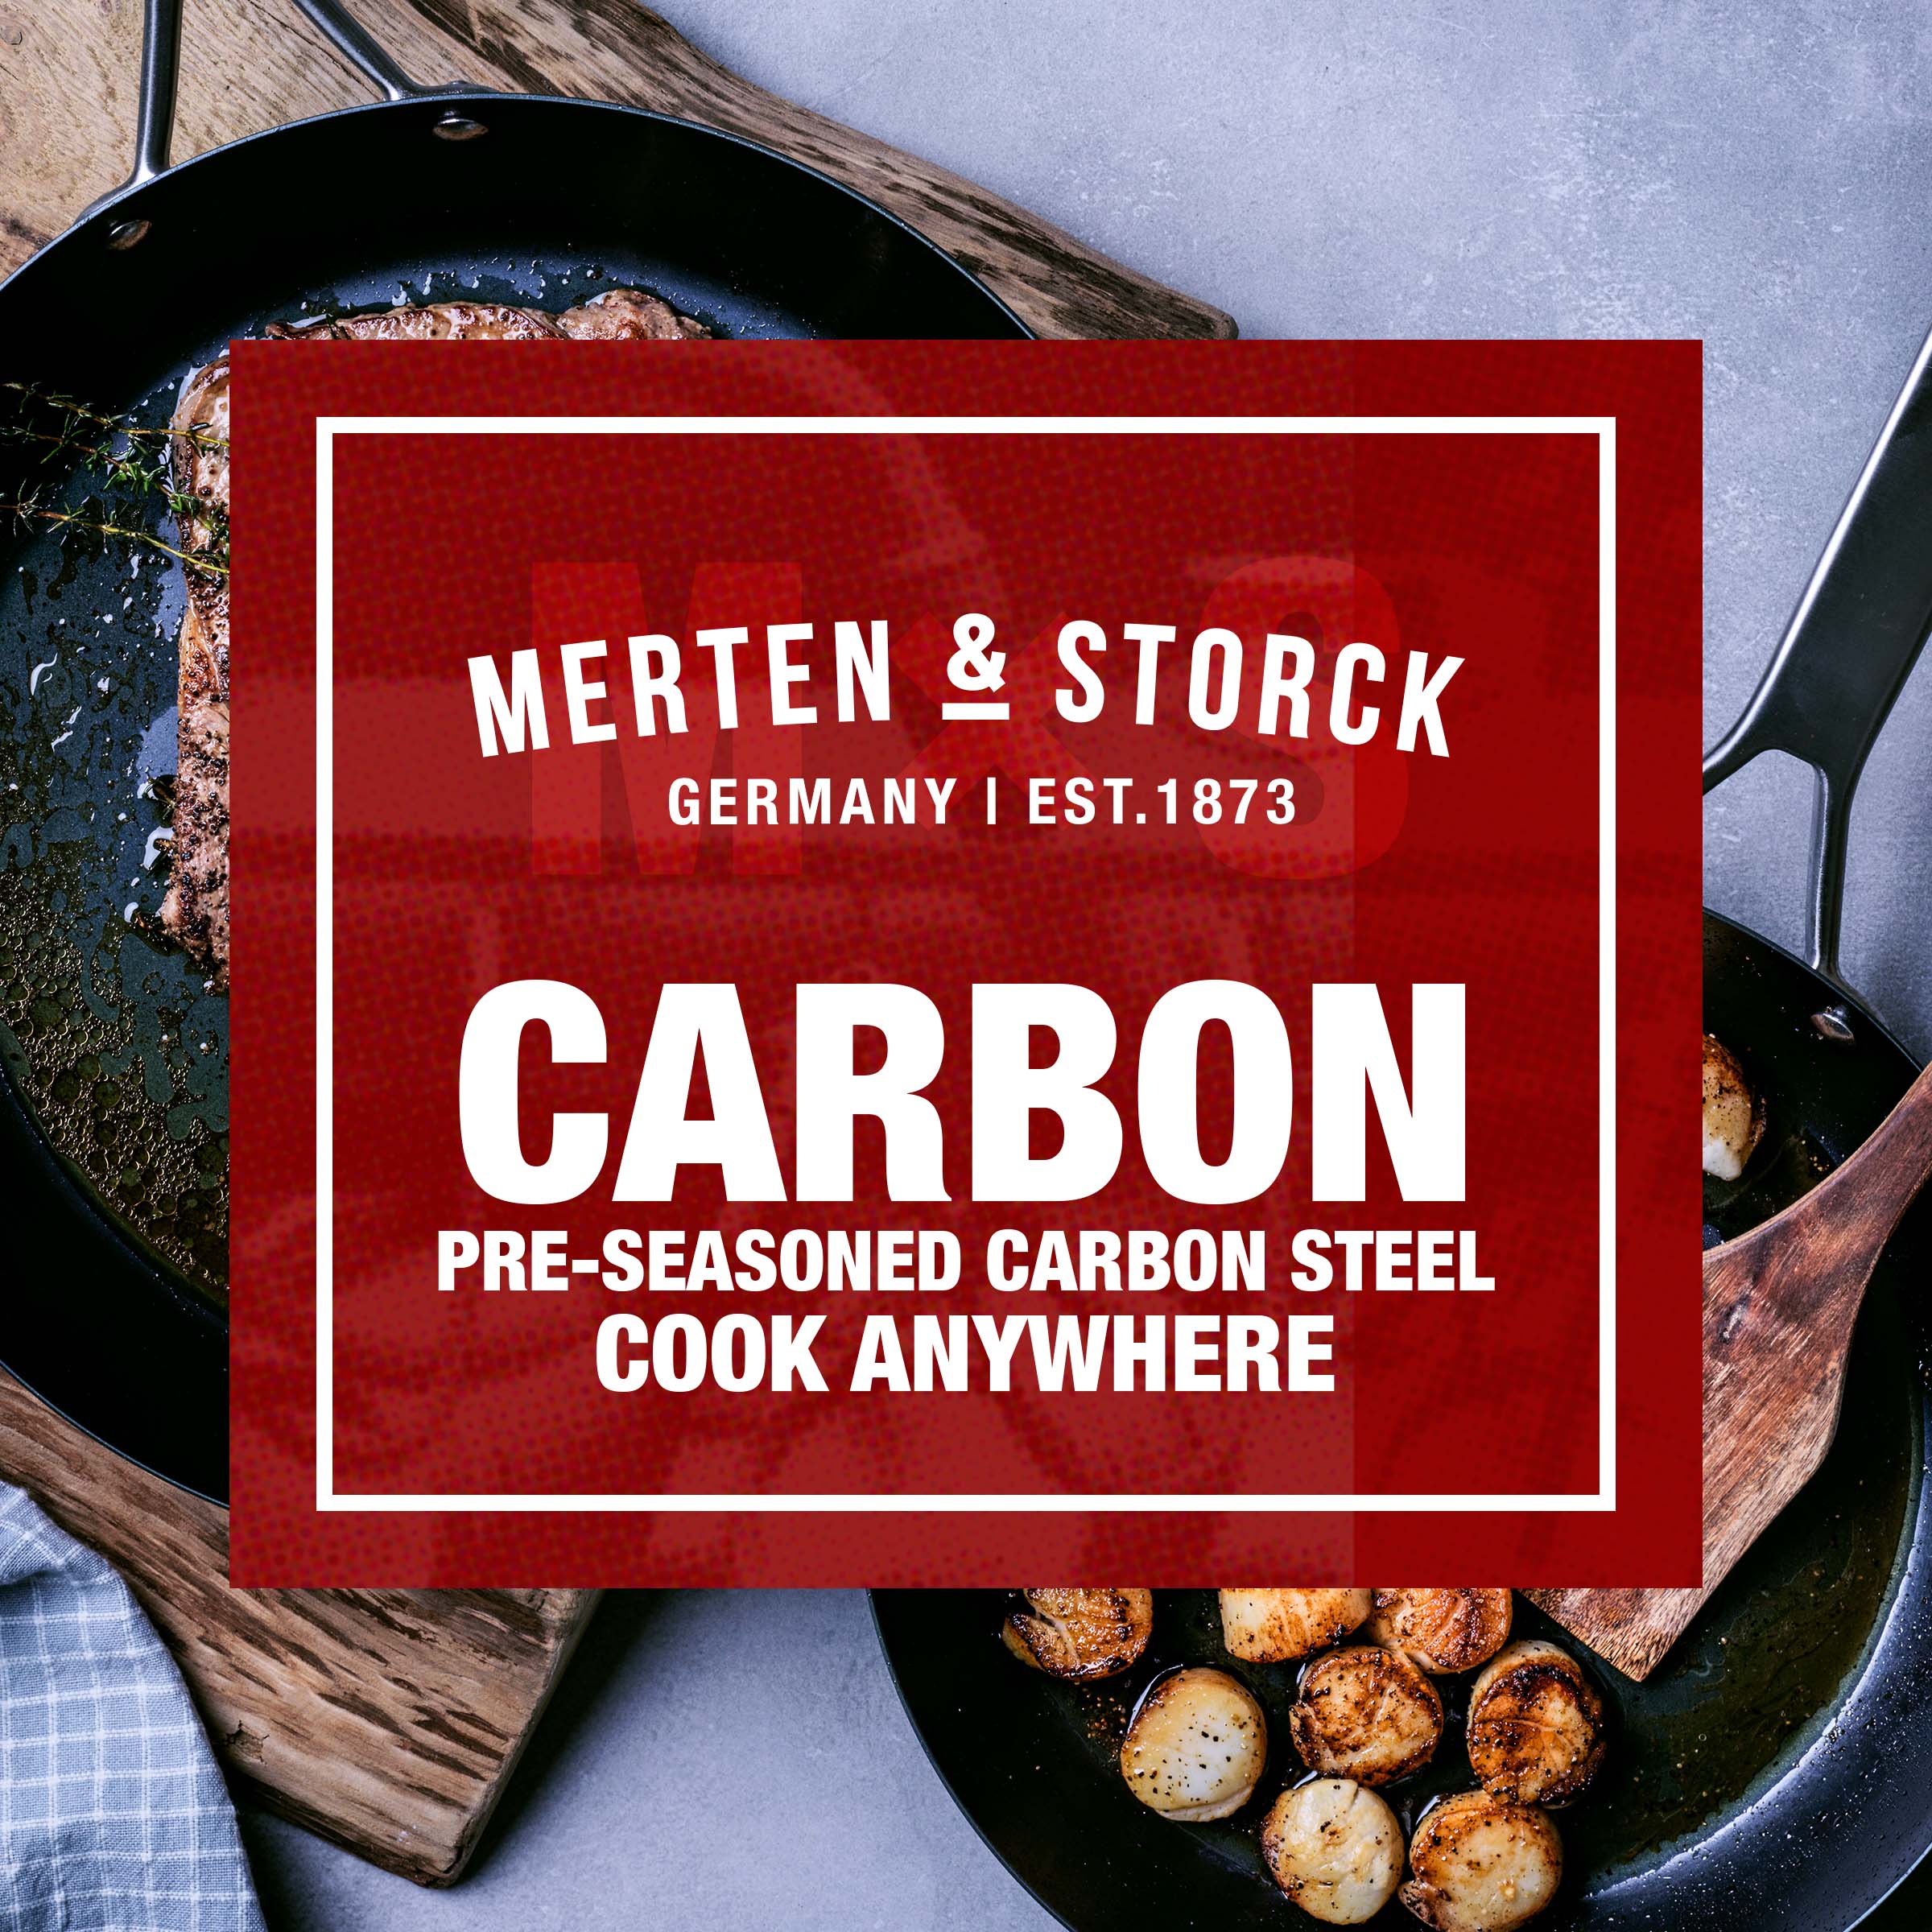 Merten & Storck Pre-Seasoned Carbon Steel Pro Induction 10" Frying Pan Skillet, Black - image 3 of 7